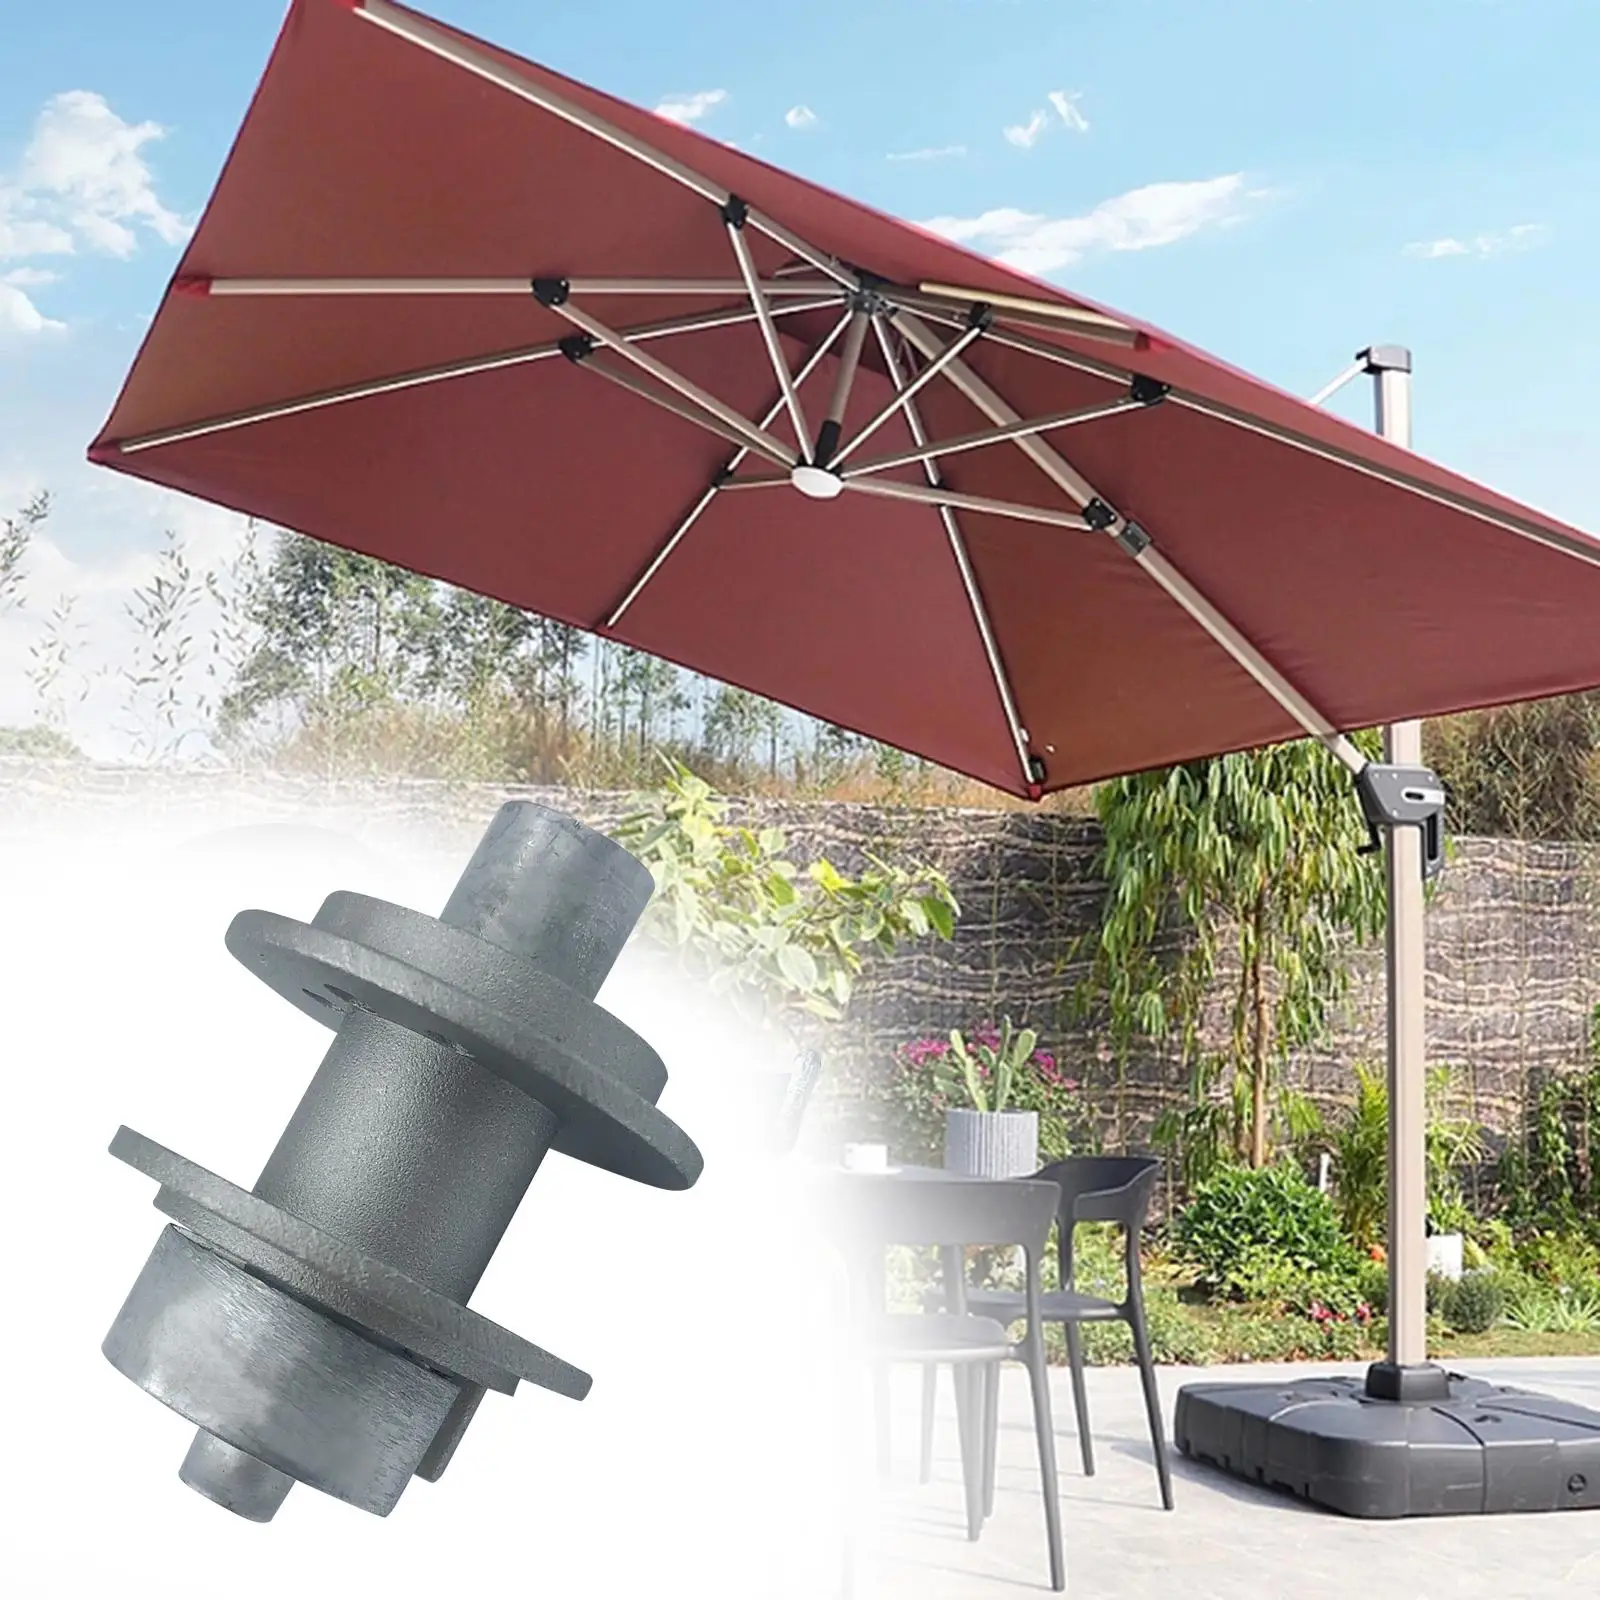 Patio Umbrella Accessories Handrail Bobbin Ring and Spool Bar Umbrella Replacement Parts for Courtyard Outdoor Patio Picnic Gray